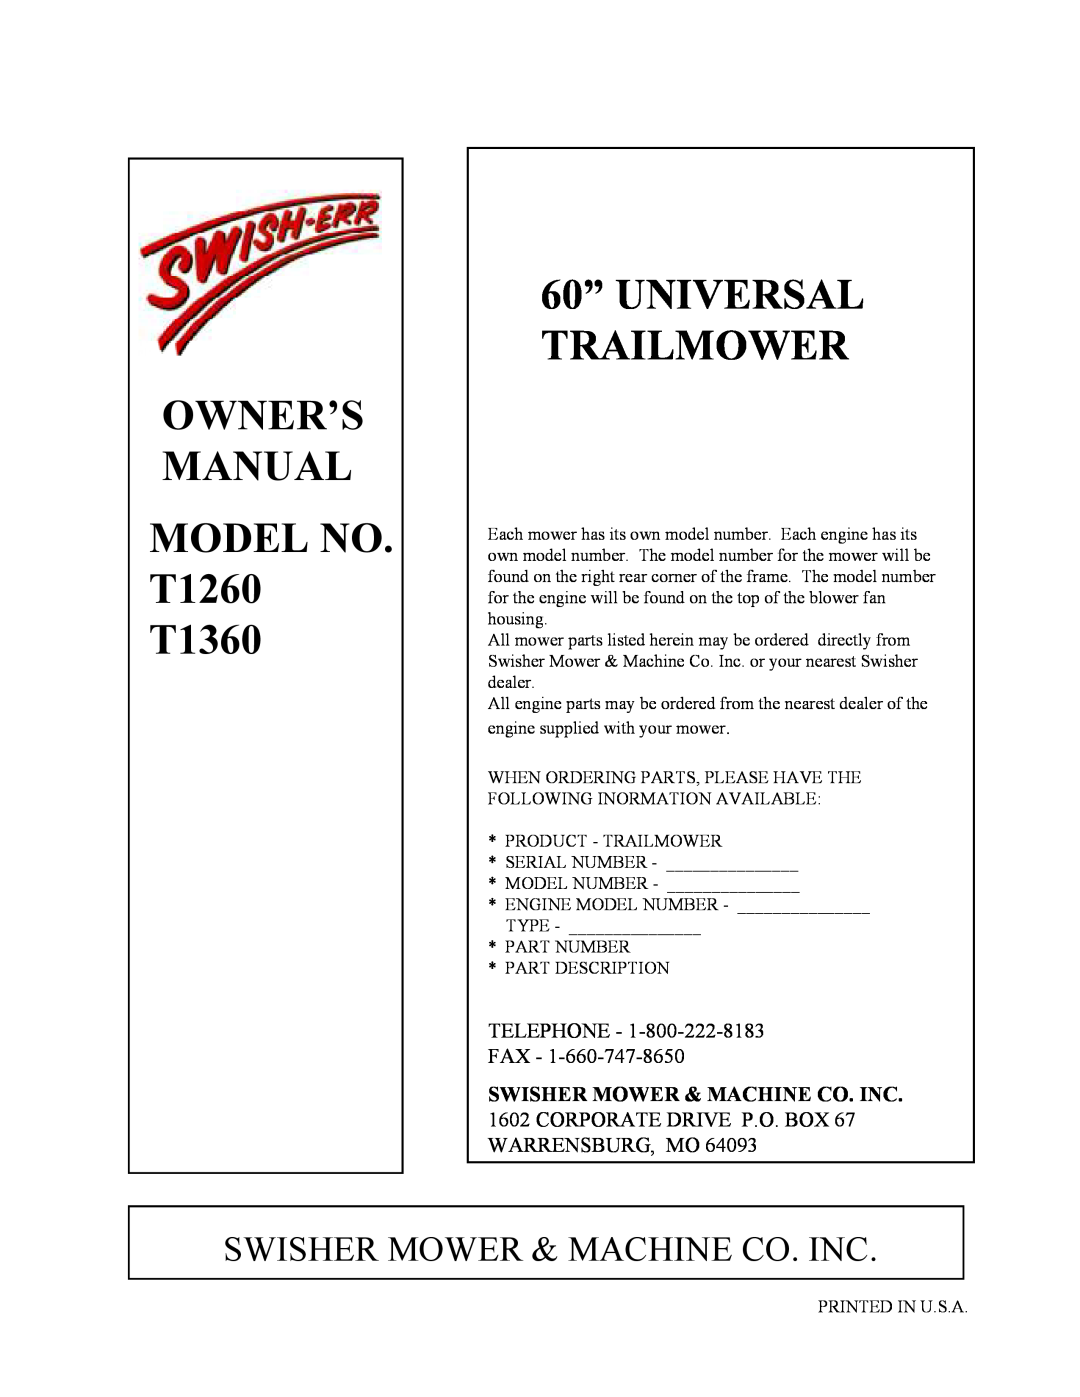 Swisher T1260, T1360 OWNER’S MANUAL MODEL NO. T1260 T1360, 60” UNIVERSAL TRAILMOWER, Swisher Mower & Machine Co. Inc 